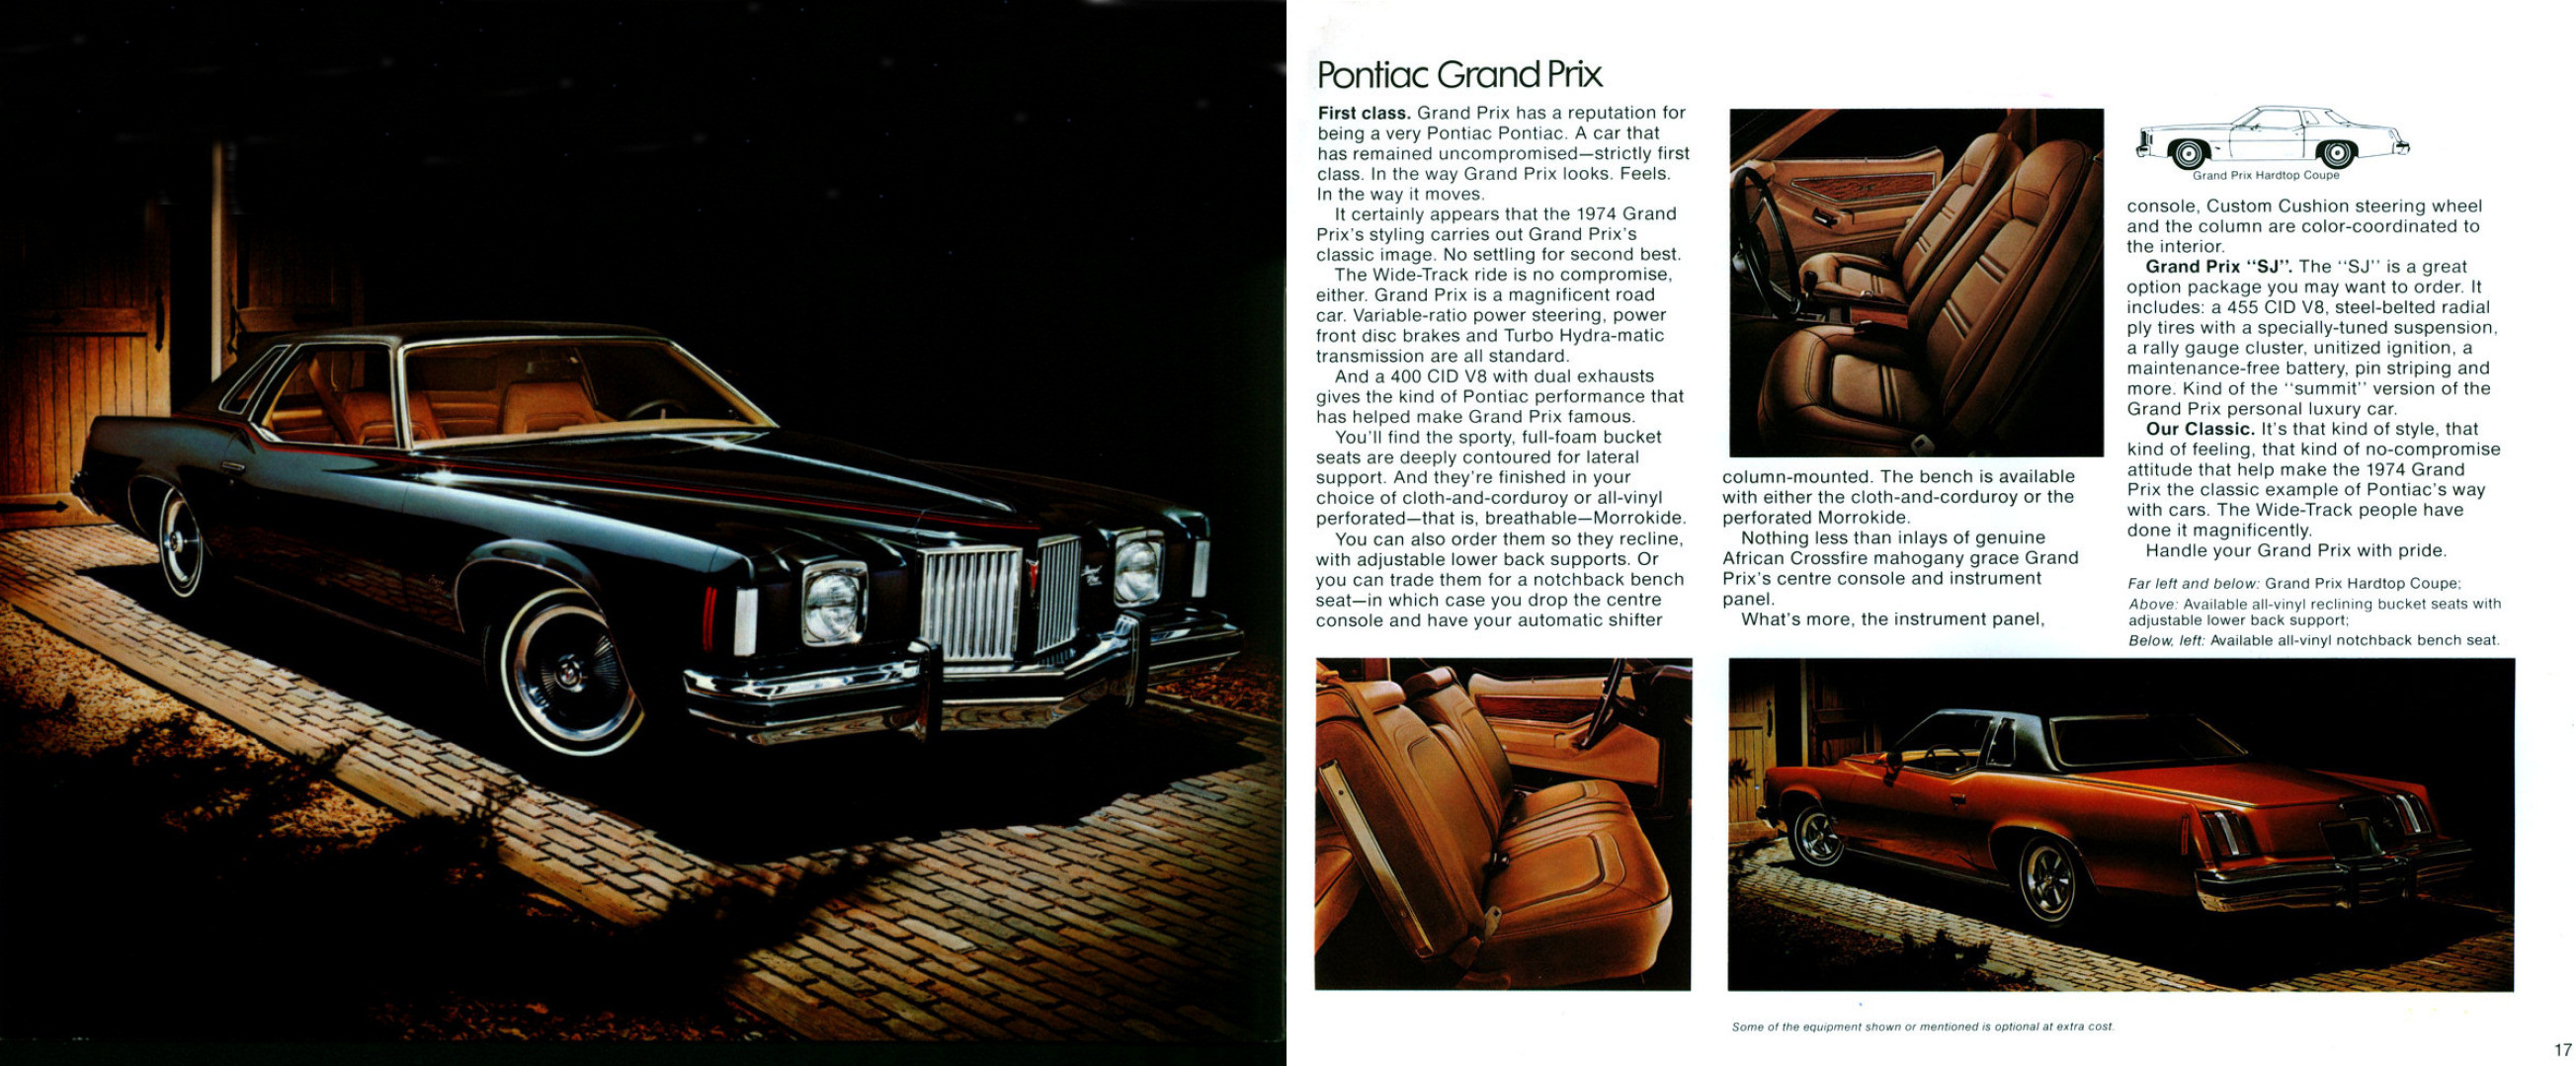 1974_Pontiac_Full_Size_Cdn-16-17